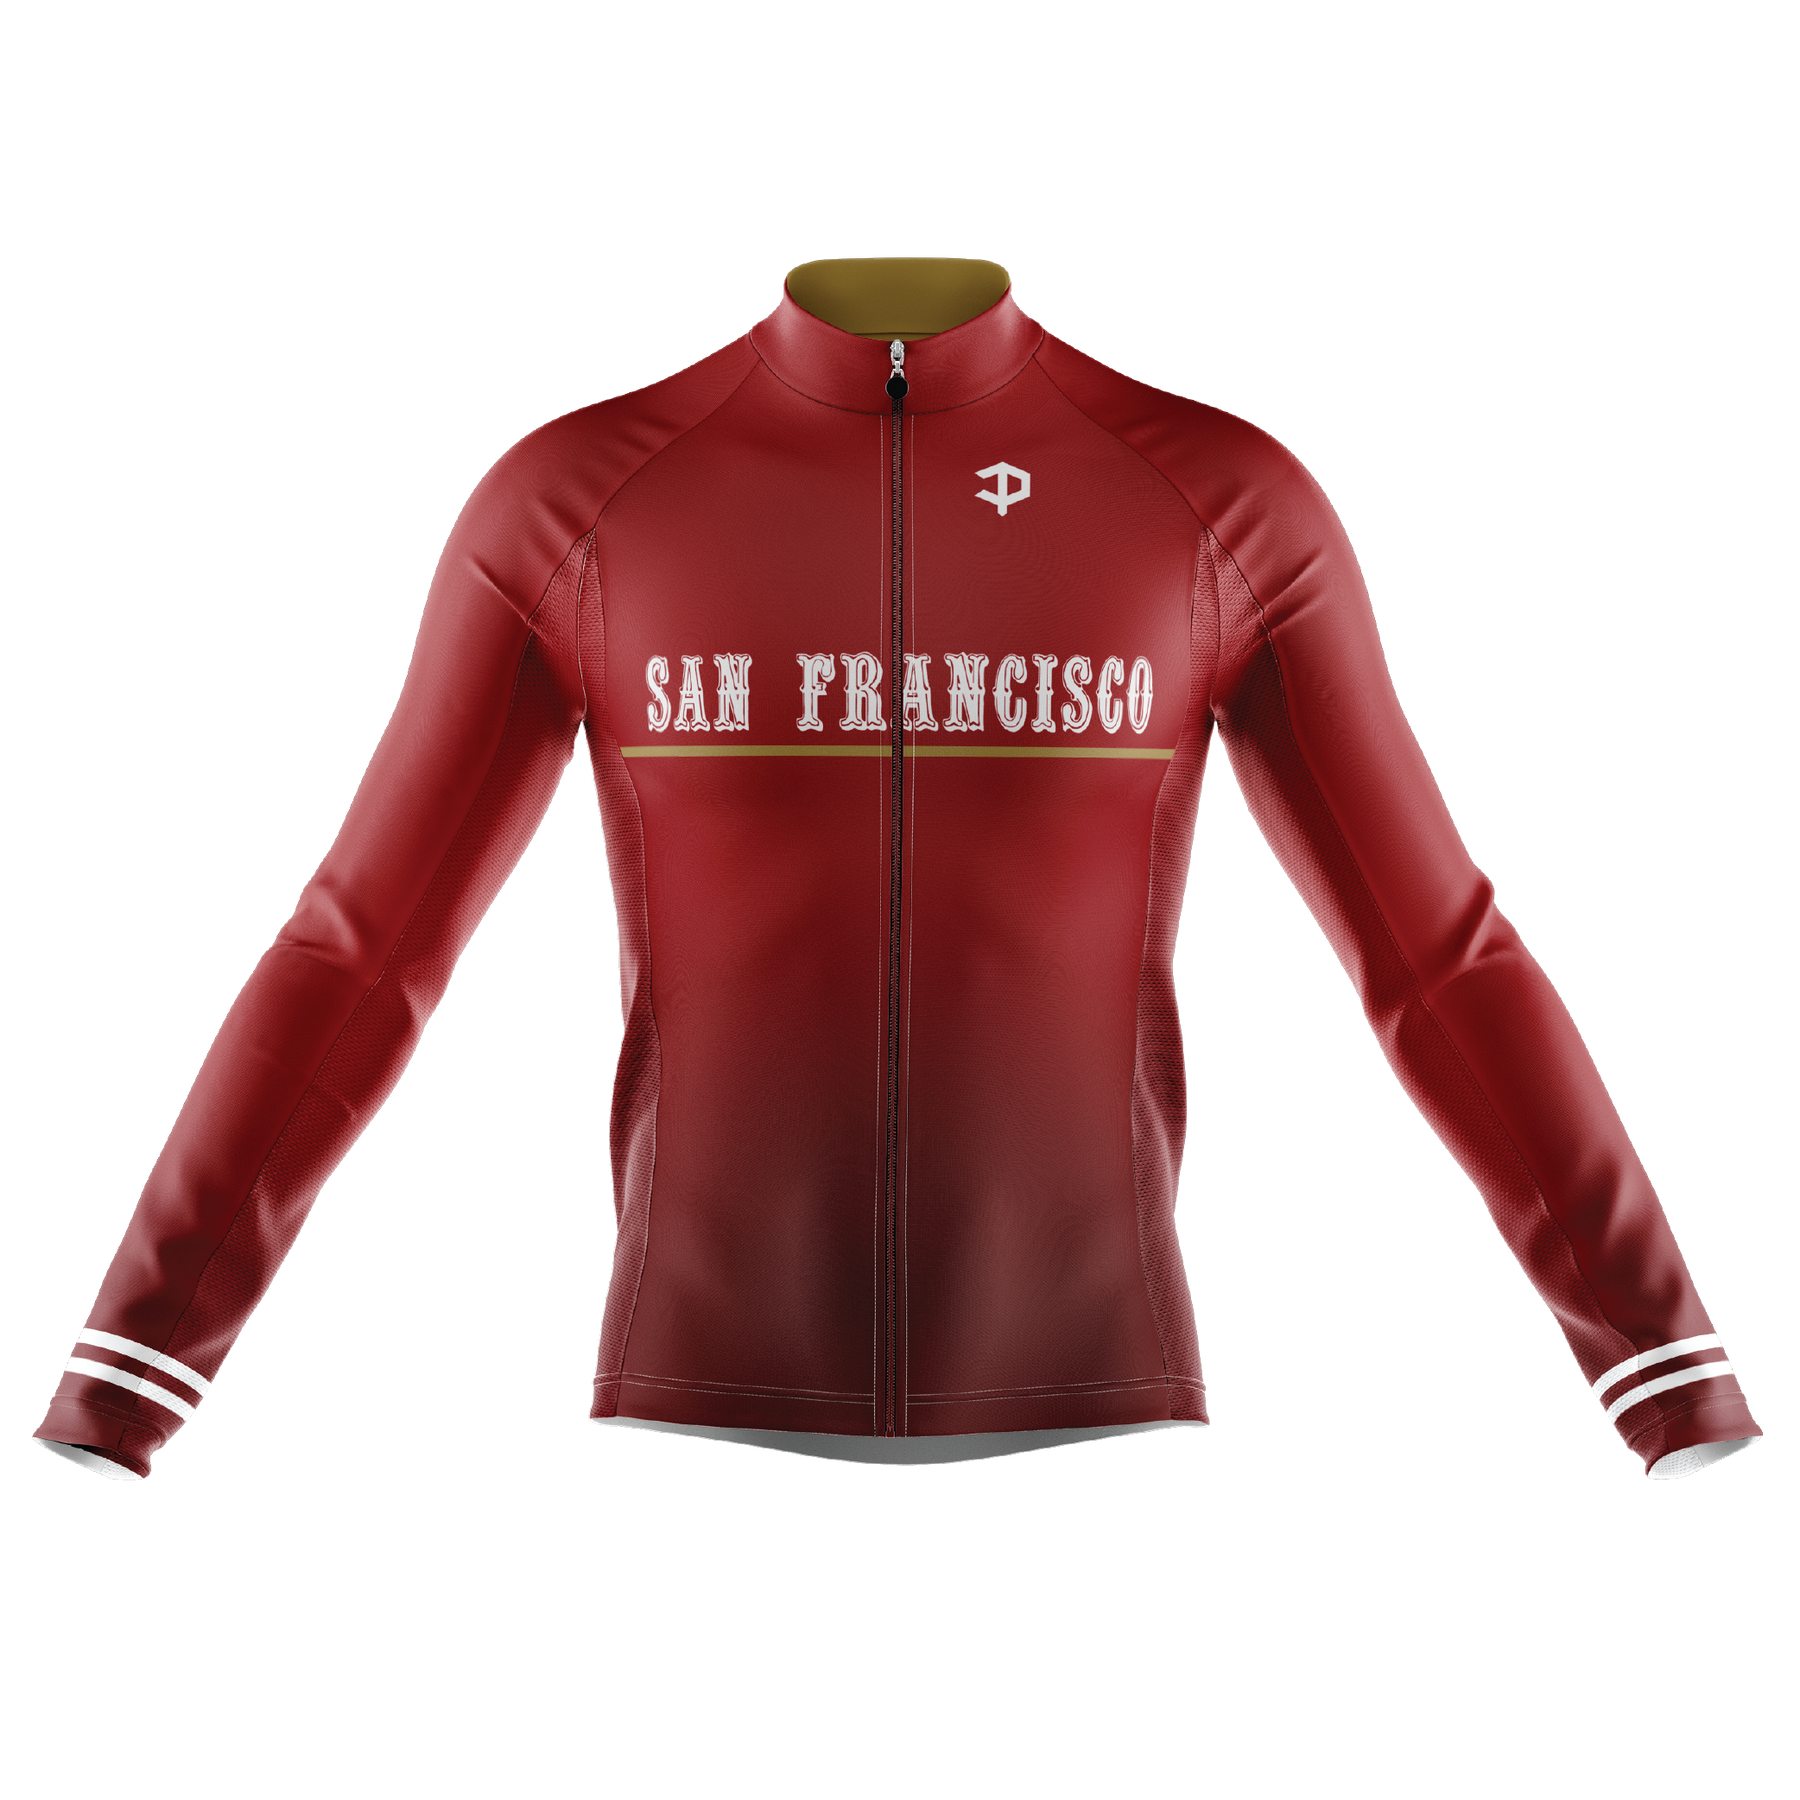 San Francisco Long Sleeve Cycling Jersey for Men D02260520_22 / 4XL